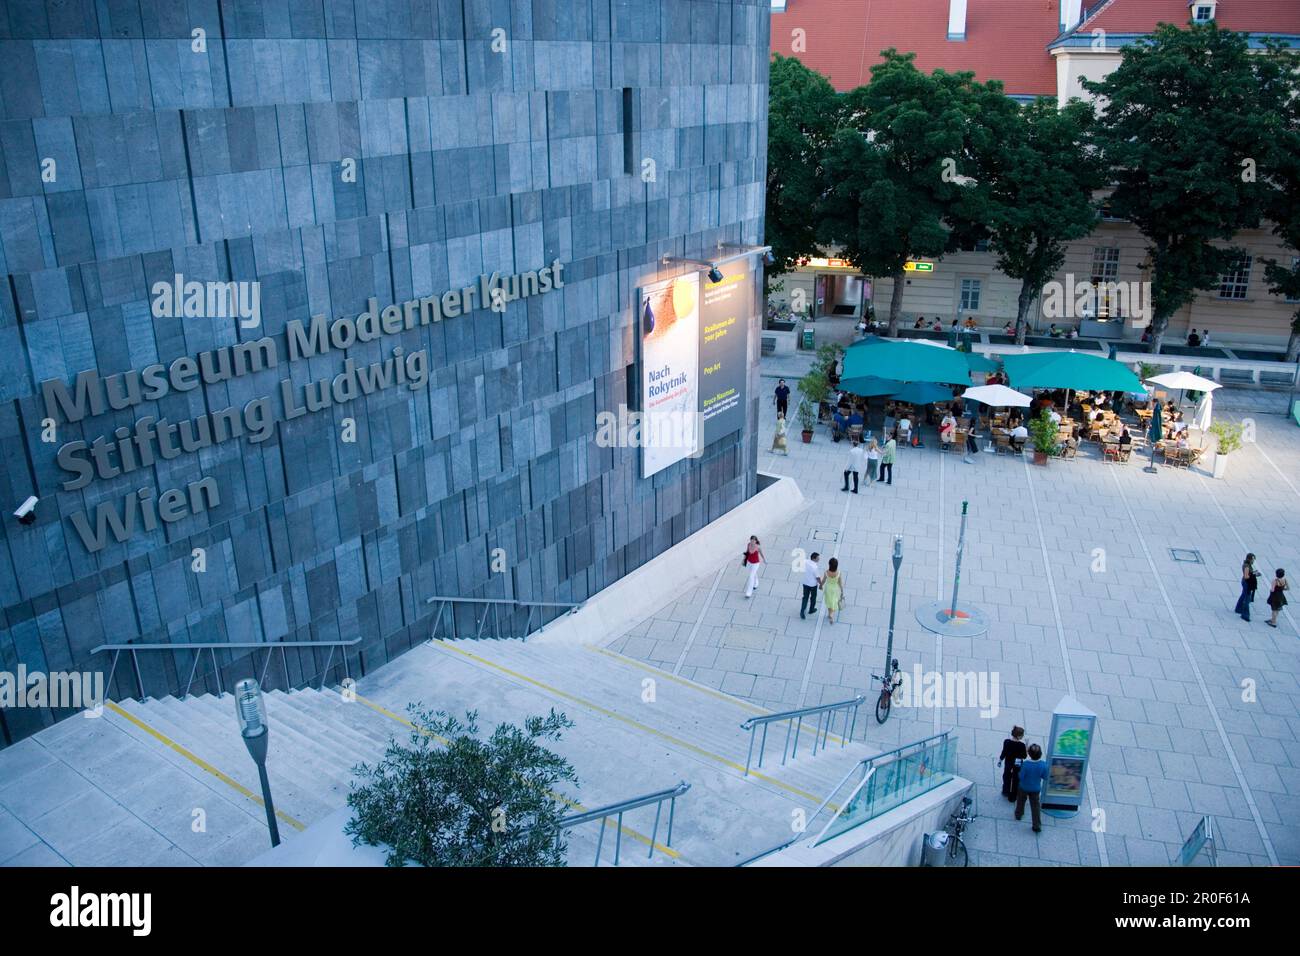 MUMOK Museum of Modern Art, Stiftung Ludwig, at MuseumsQuartier, Vienna, Austria Stock Photo